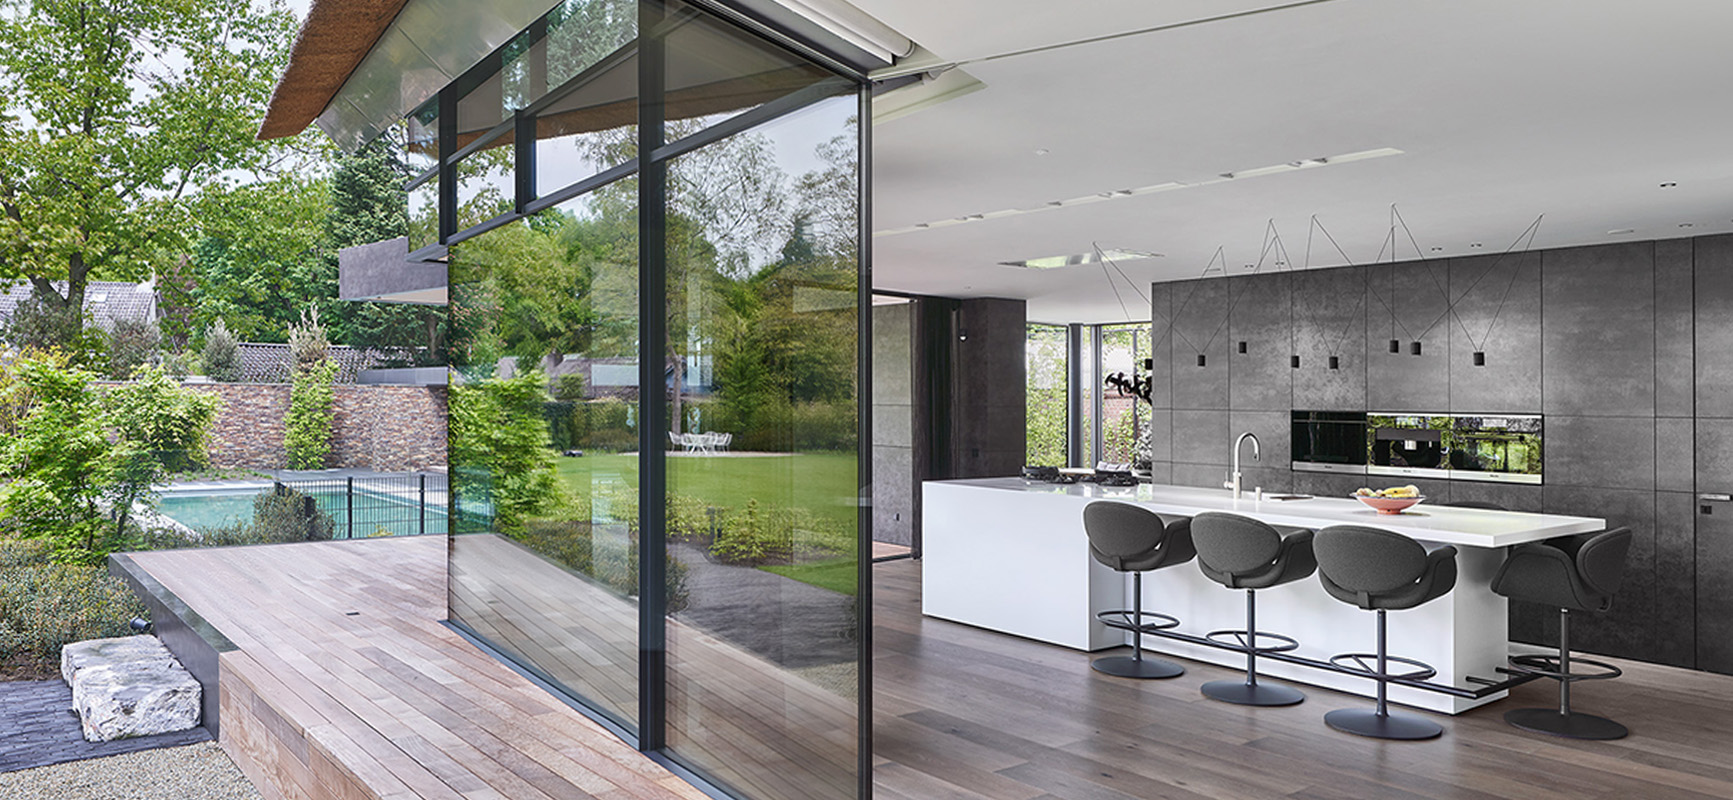 Villa Innendesign | Eindhoven (NL) - Residential Interior Design